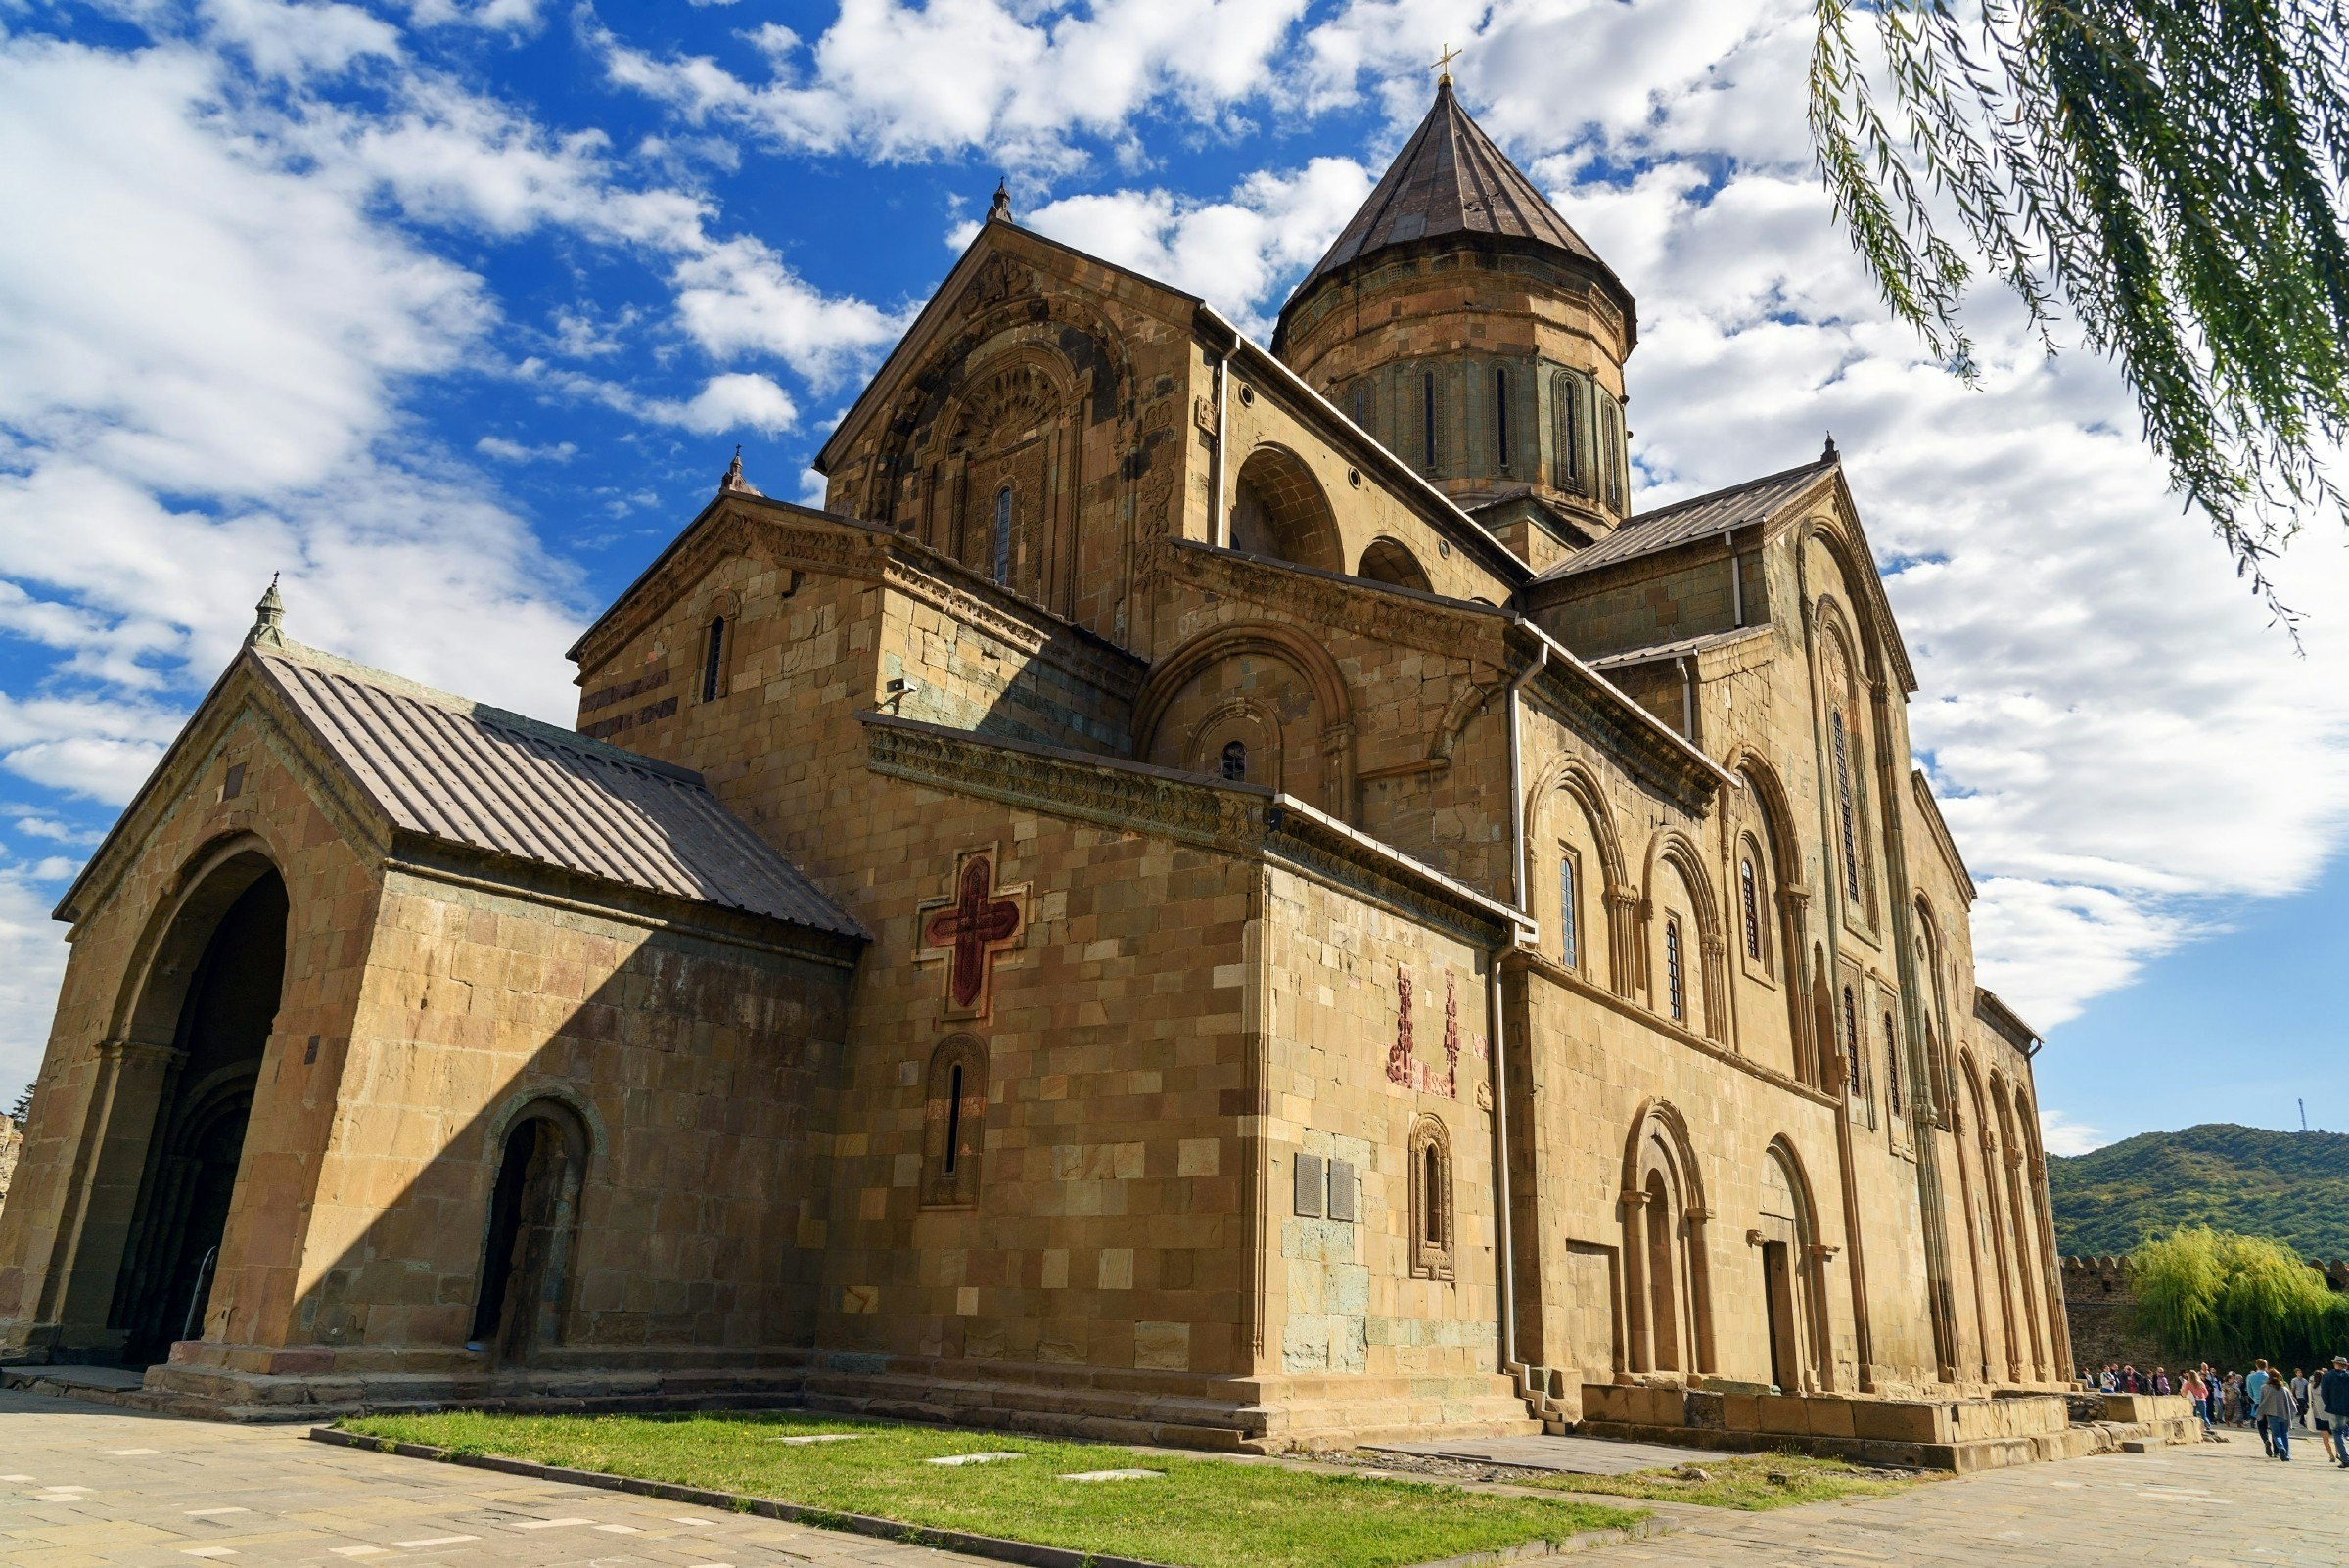 Svetitskhoveli Cathedral in historic town of Mtskheta, Georgia